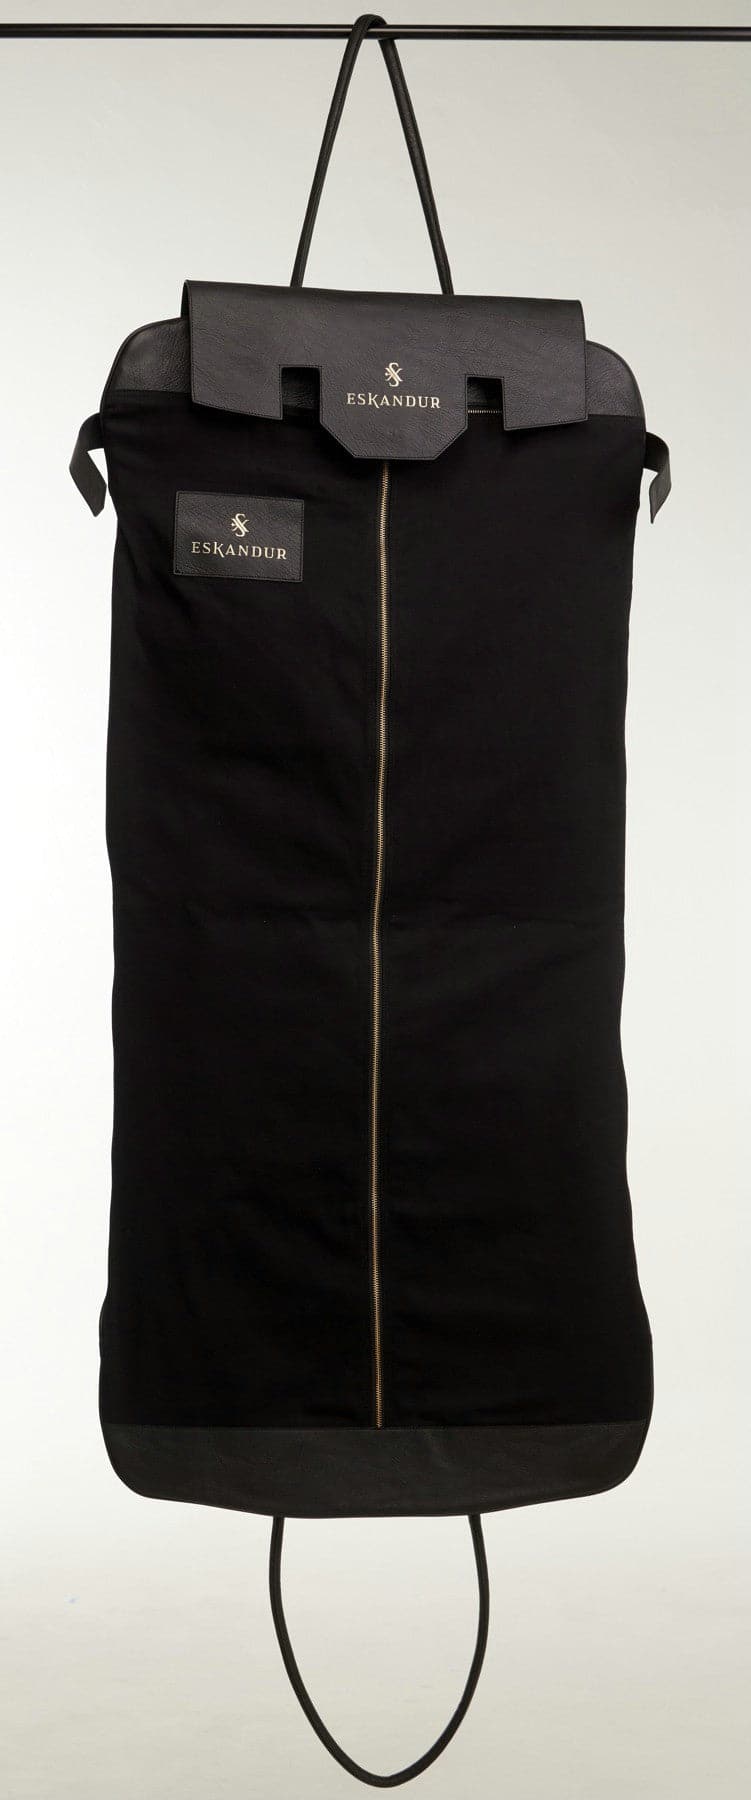 Eskandur luxury premium leather garment bag open view